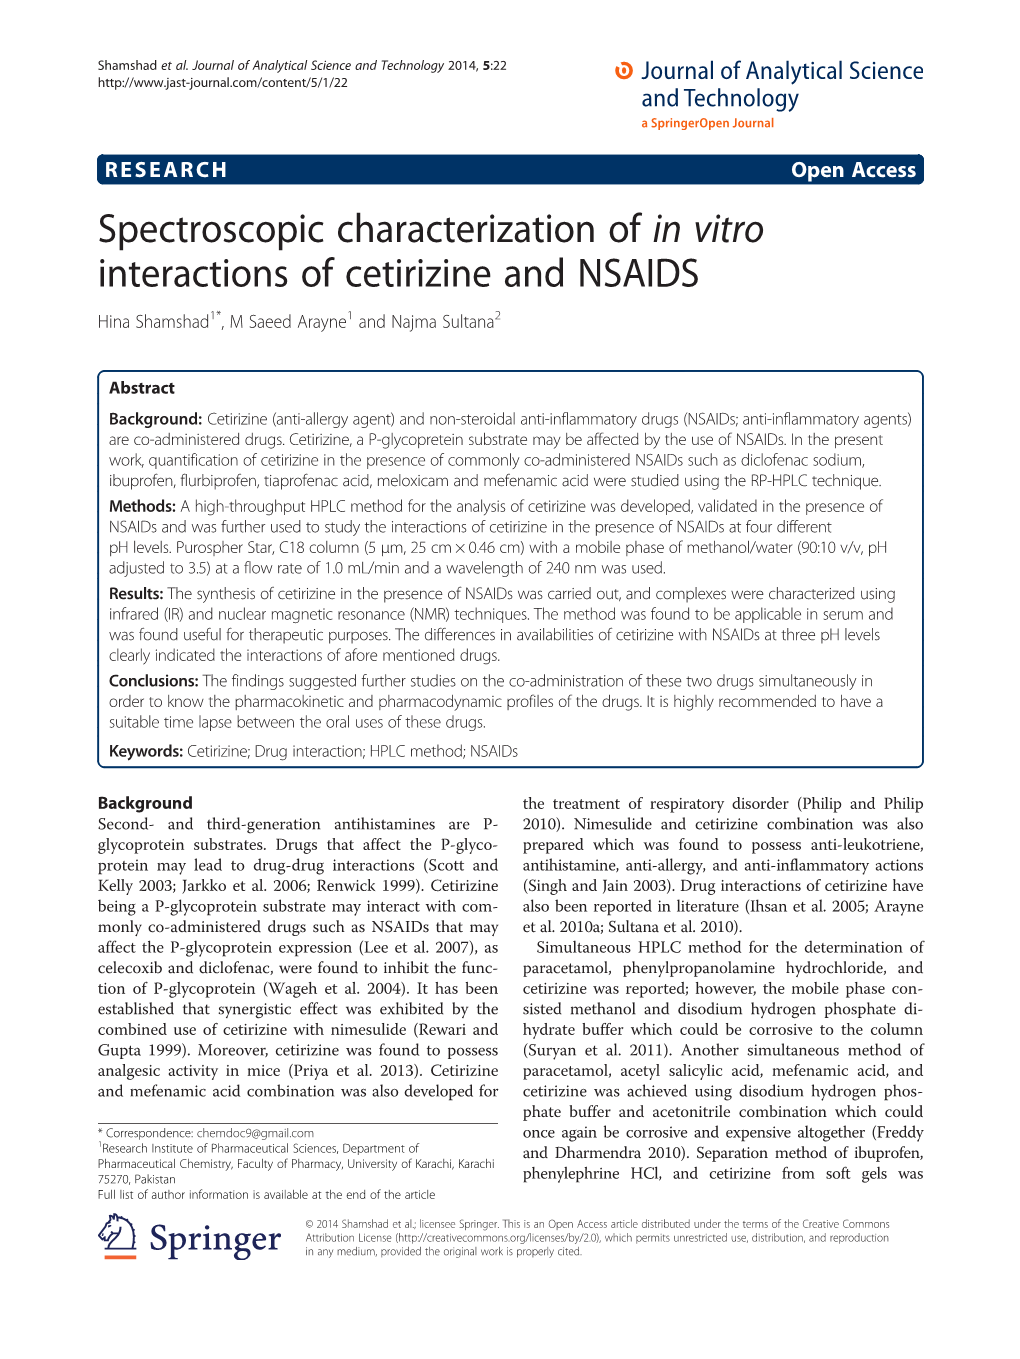 Spectroscopic Characterization of in Vitro Interactions of Cetirizine and NSAIDS Hina Shamshad1*, M Saeed Arayne1 and Najma Sultana2